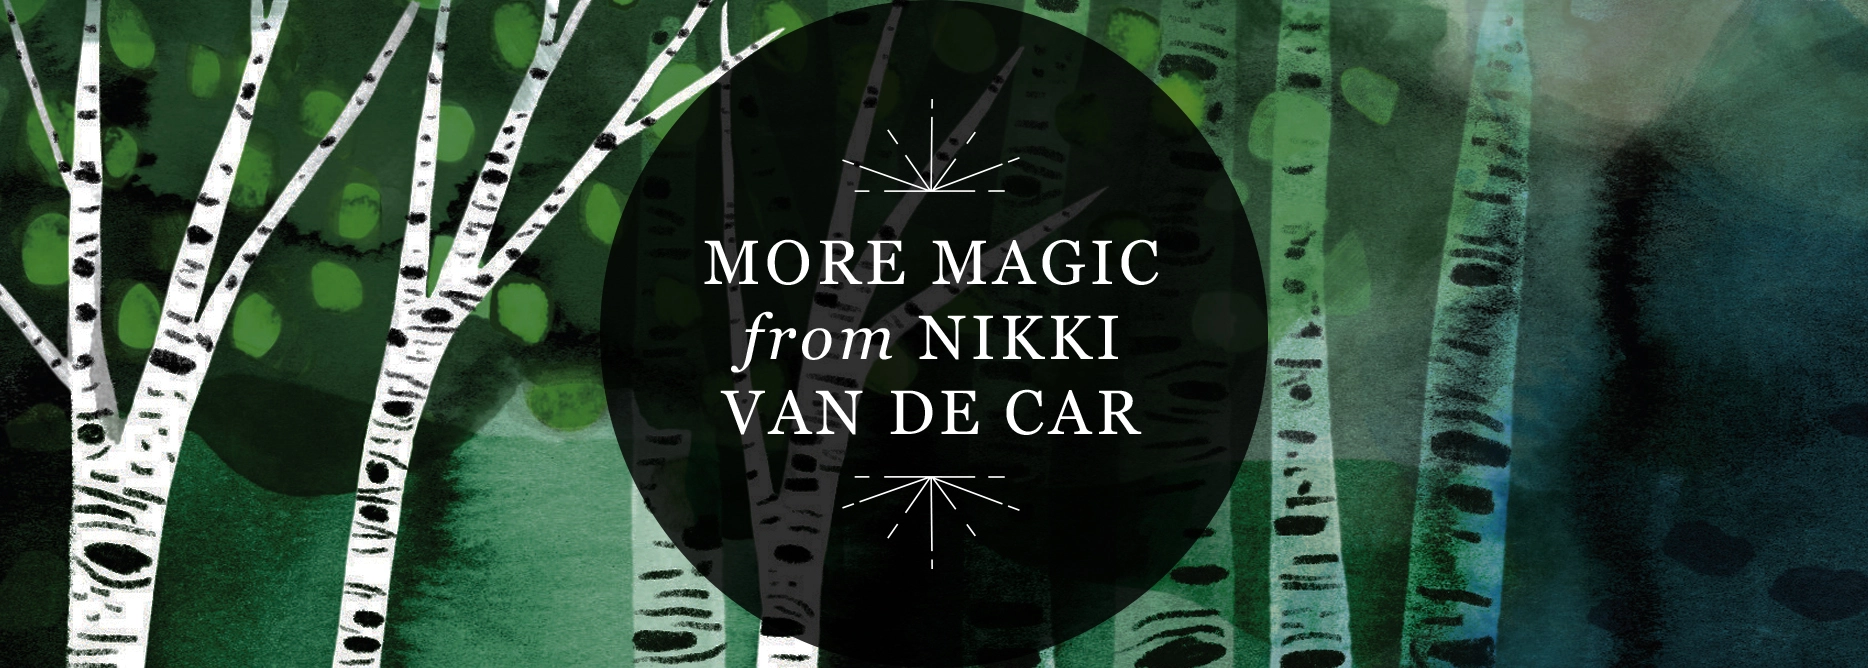 RP Mystic - Illustrated header image that reads 'More Magic from Nikki Van de Car'